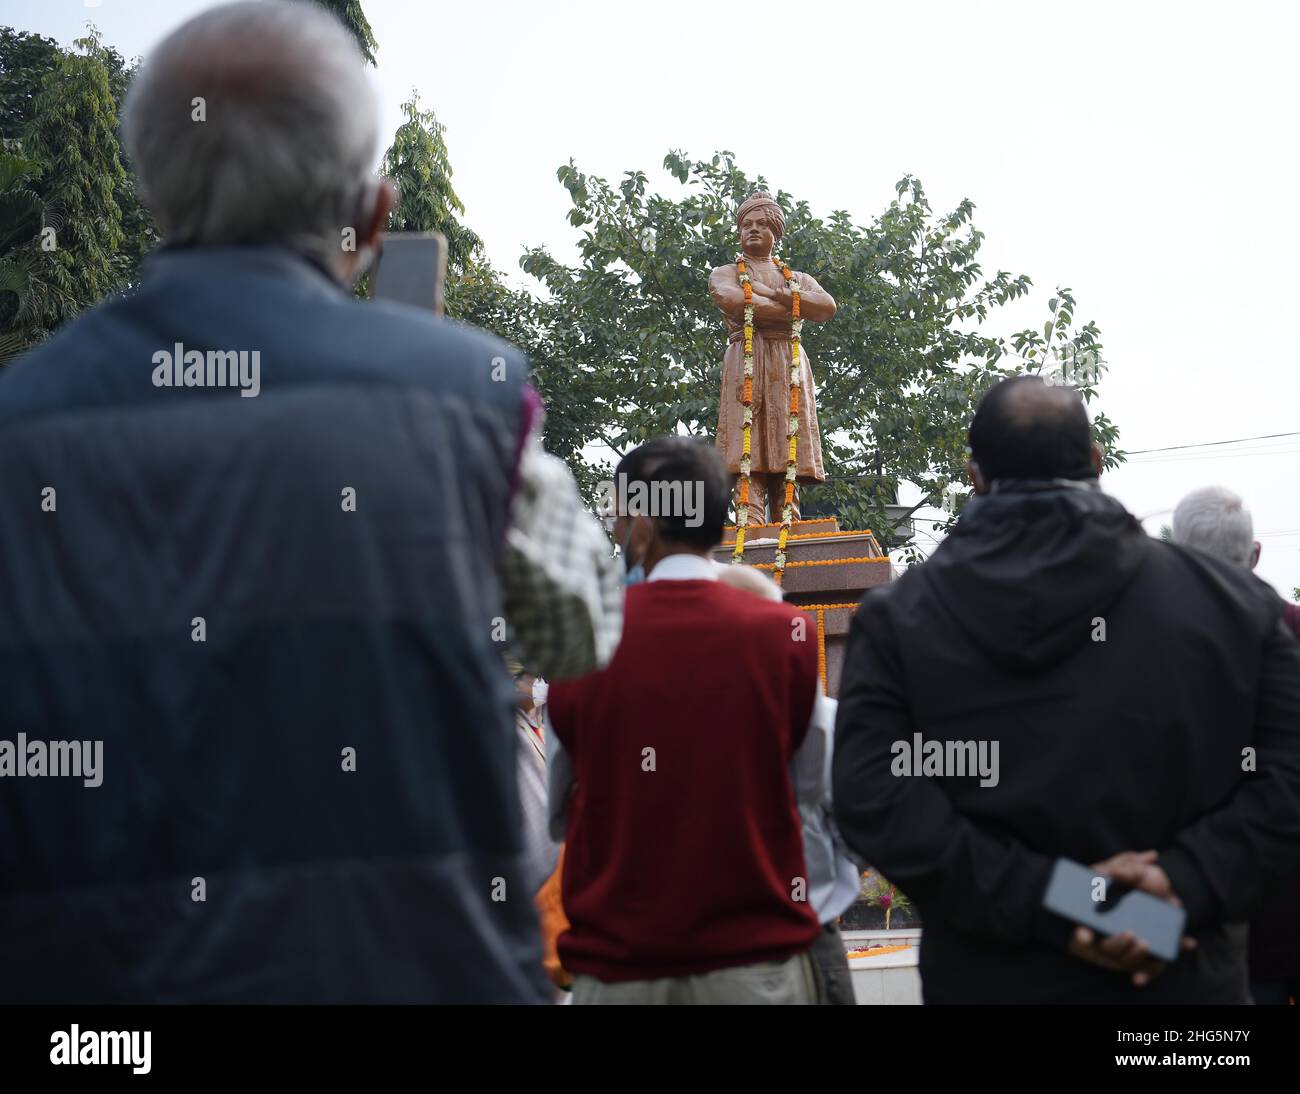 People gathered in front of the statue of Swami Vivekananda during celebration of Vivekananda’s 159th birth anniversary at Agartala. Tripura, India. Stock Photo